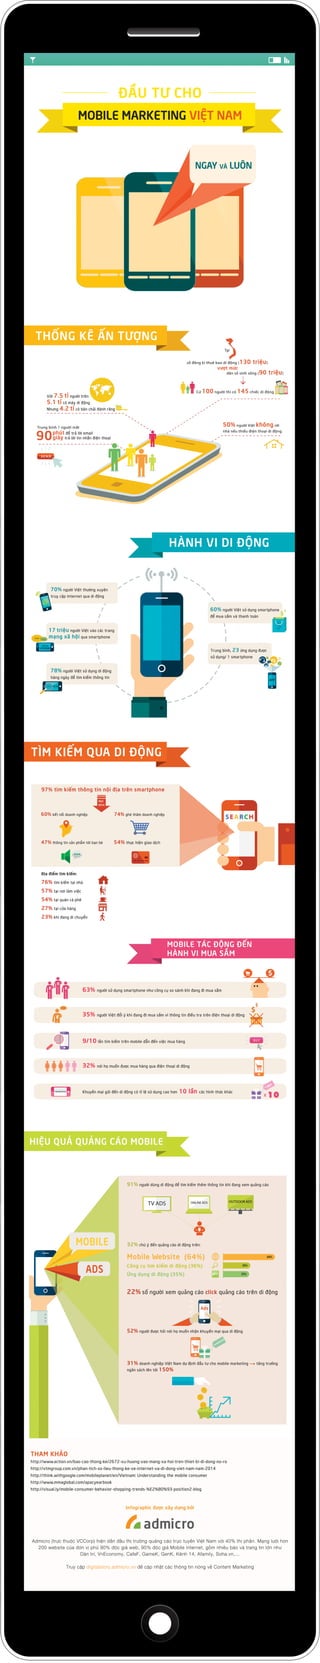 Mobile Marketing tại Việt Nam 